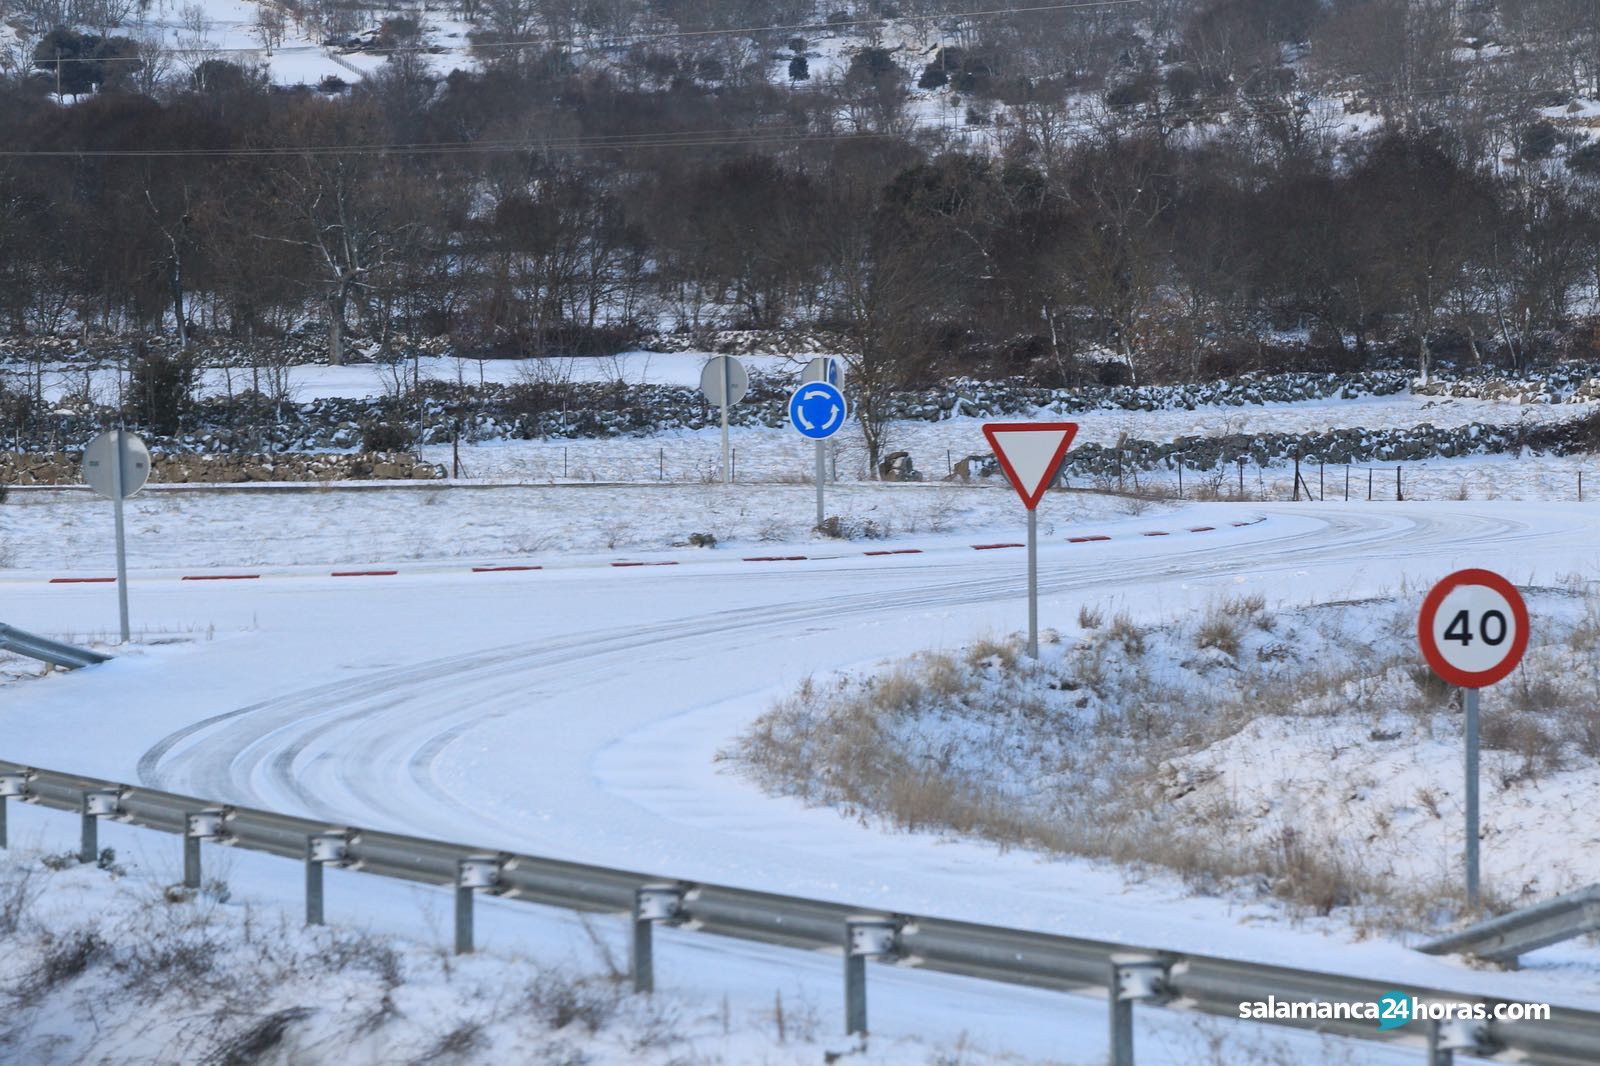  Carretera hielo nieve (6) 